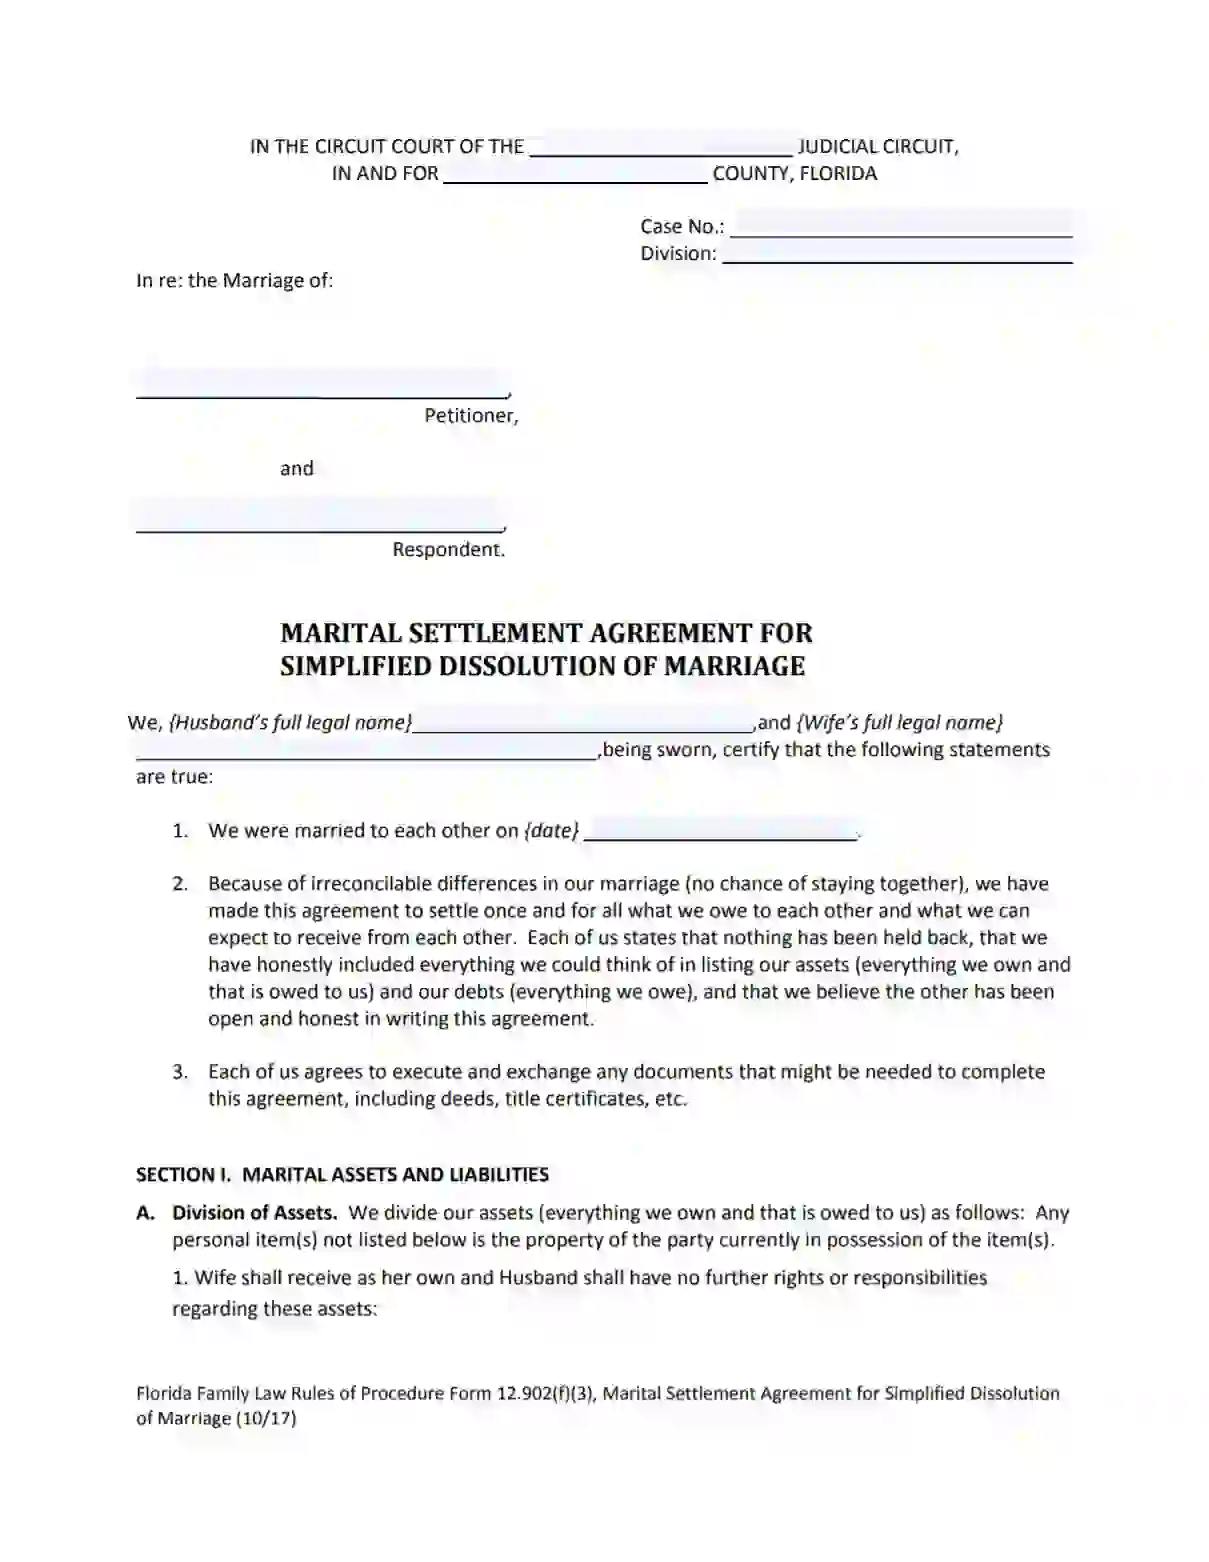 florida marital settlement agreement